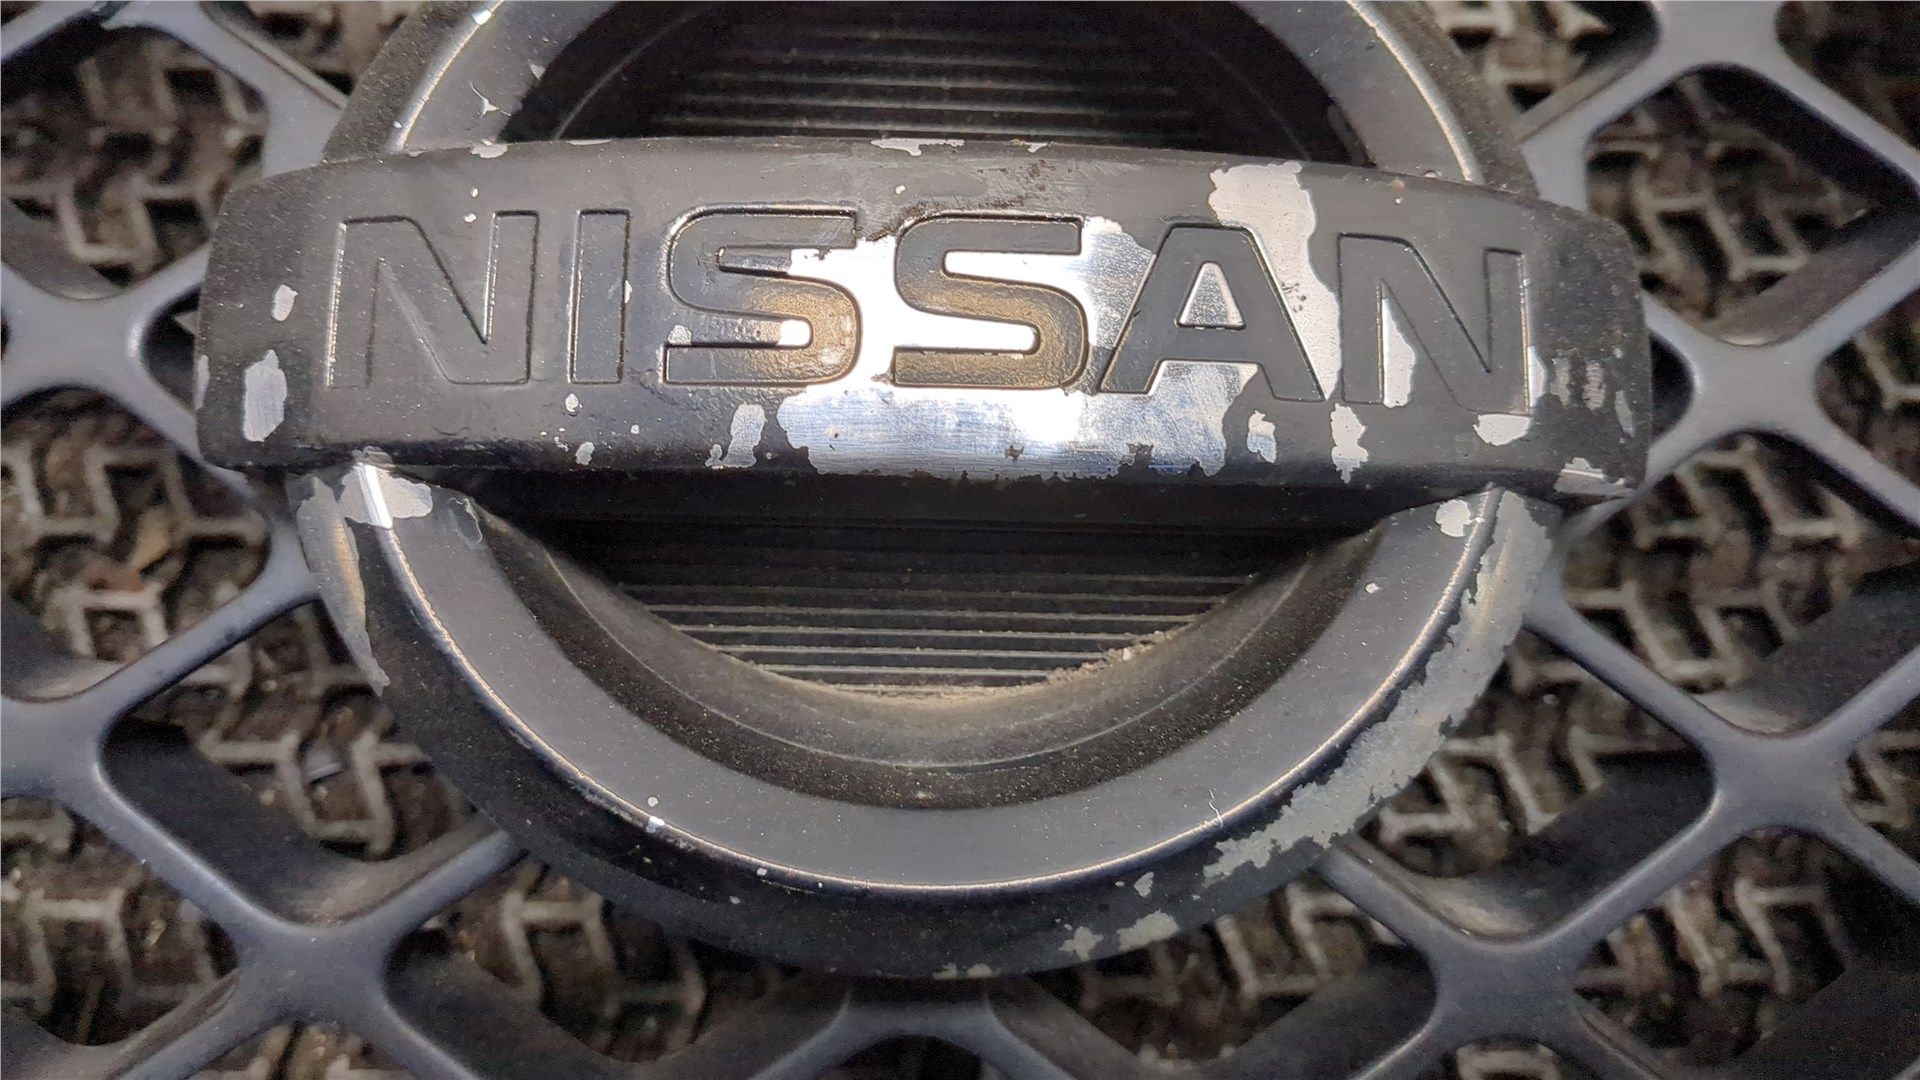 Б/У ориг. 62310EB400 Решетка радиатора Nissan Navara 2005-2015, царапины, дефект покрытия by3c8036618 Б/У запчасти